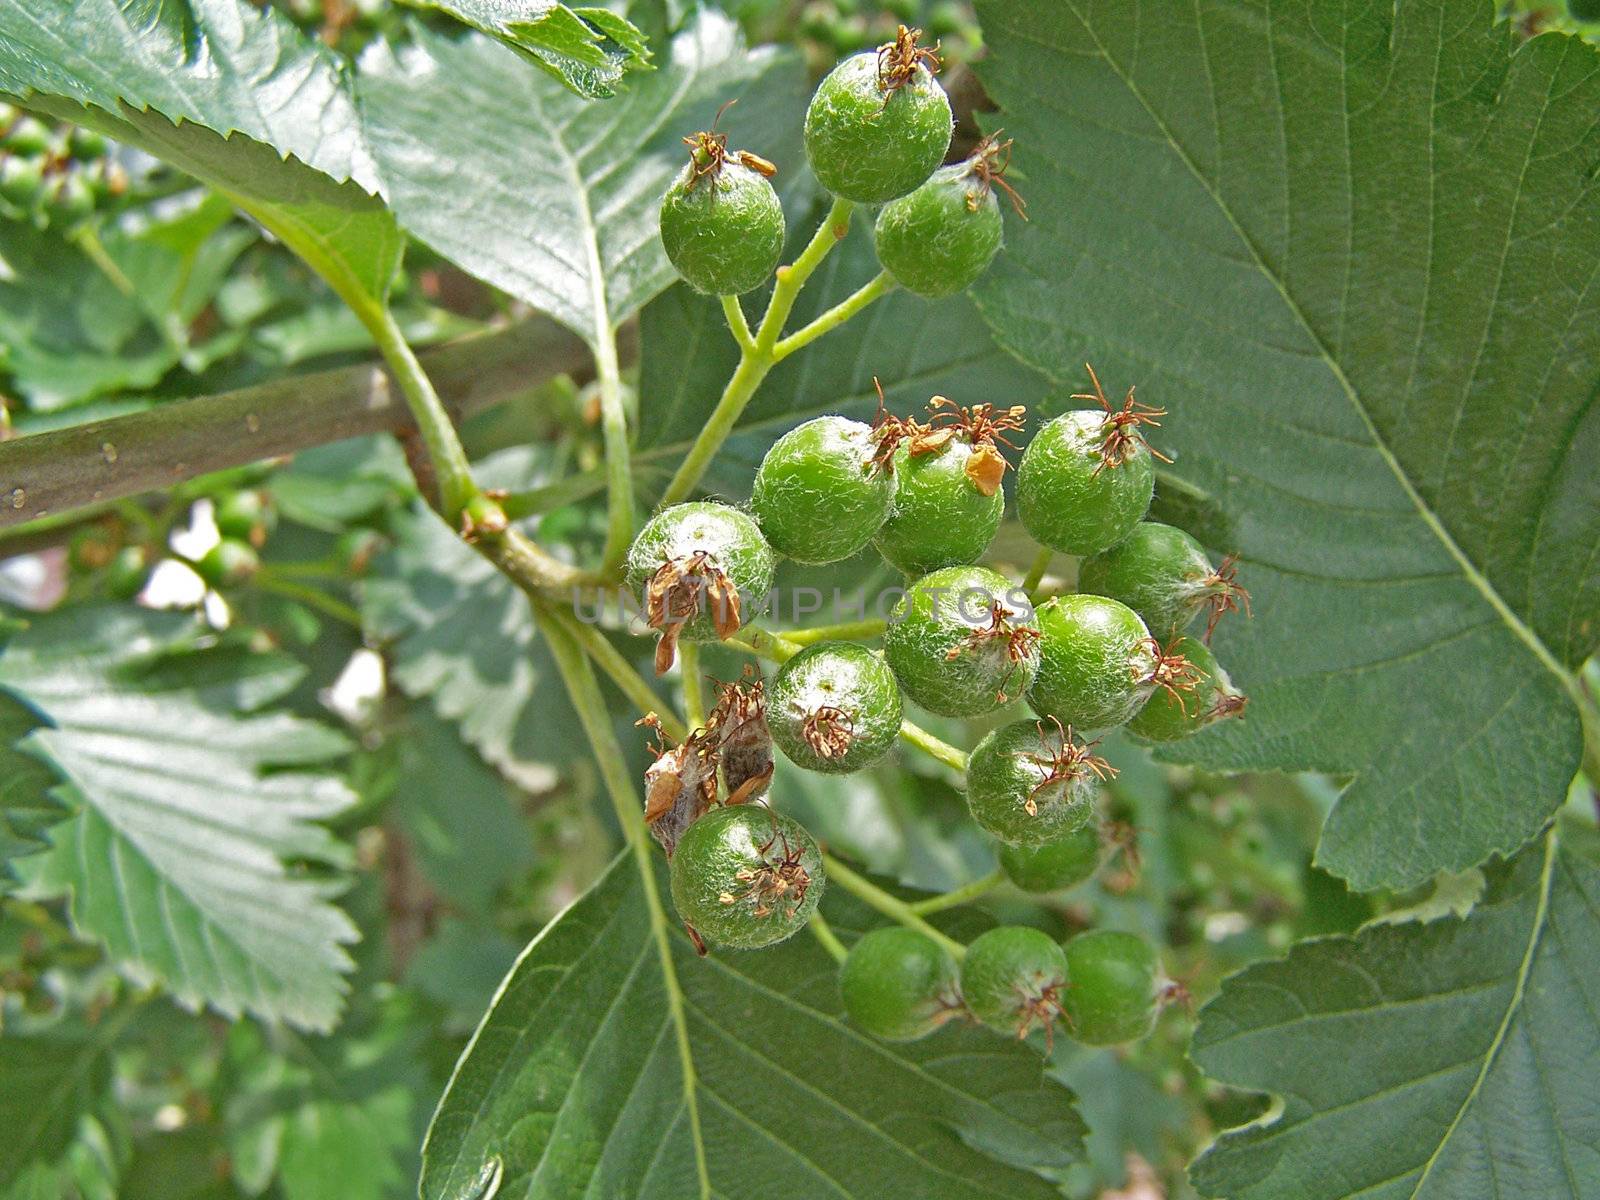 Close up of the green rowan berry bunch